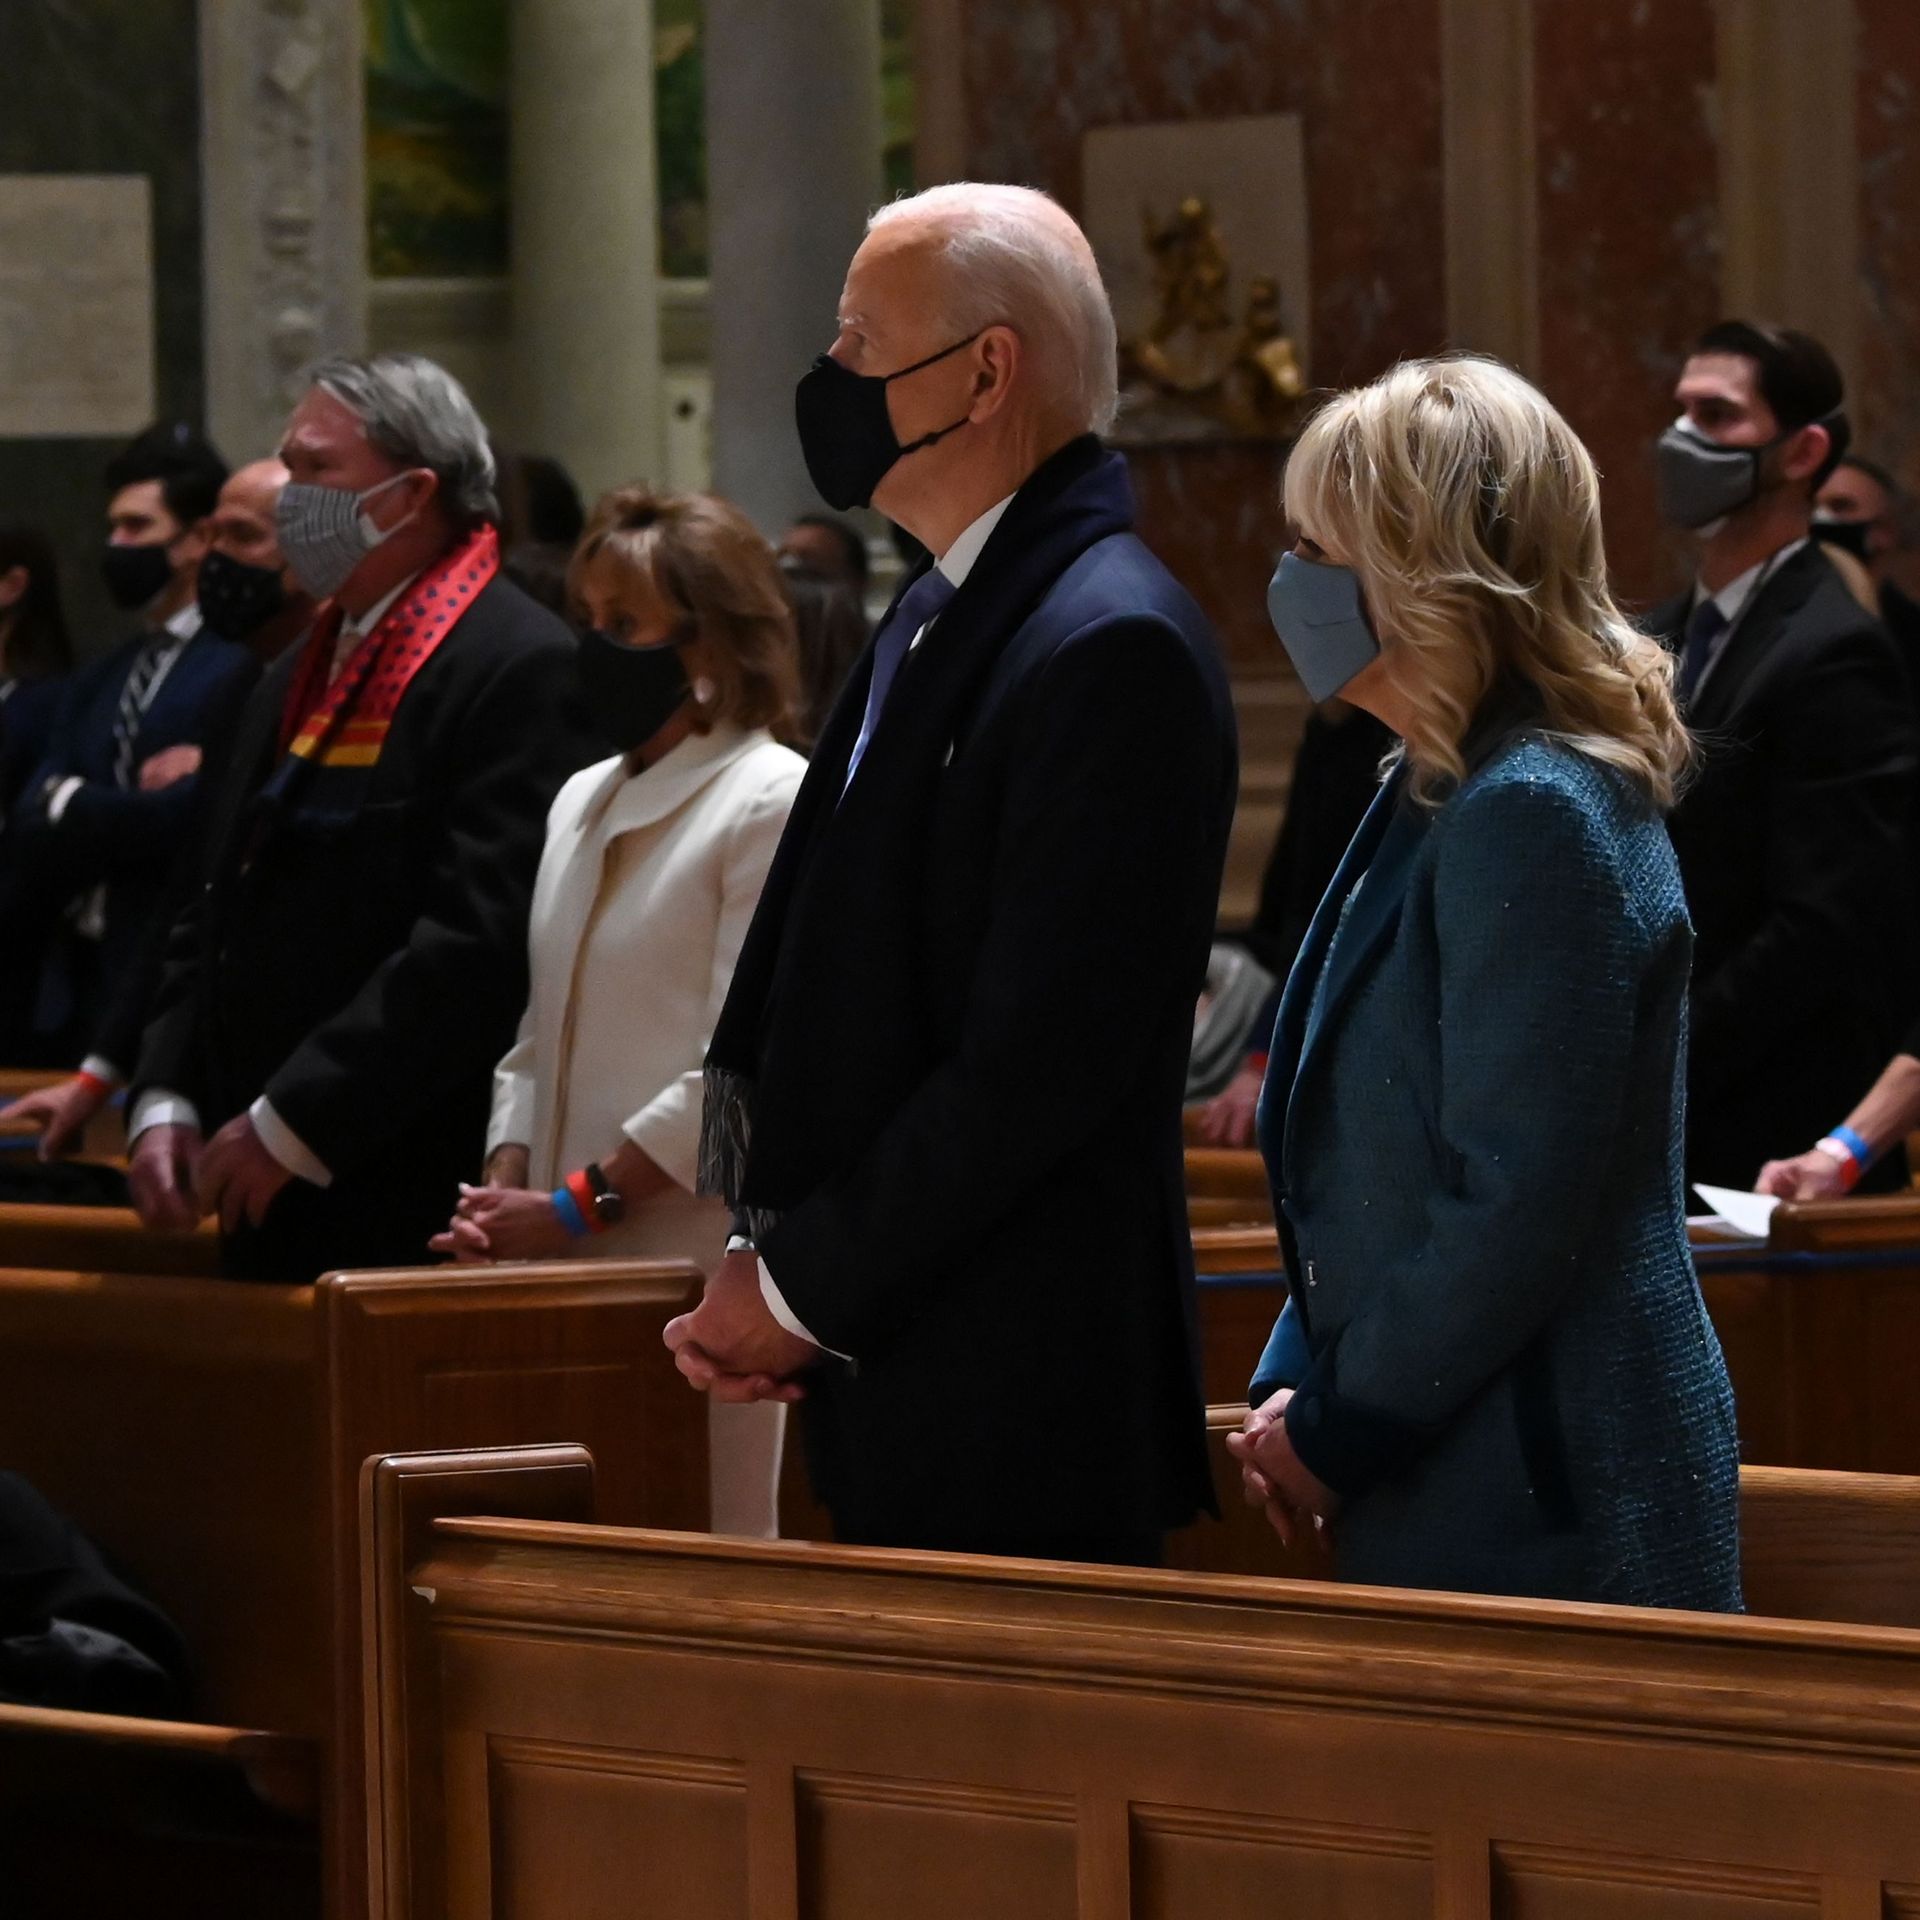 Joe Biden and Jill Biden stand next to each other in a church pew